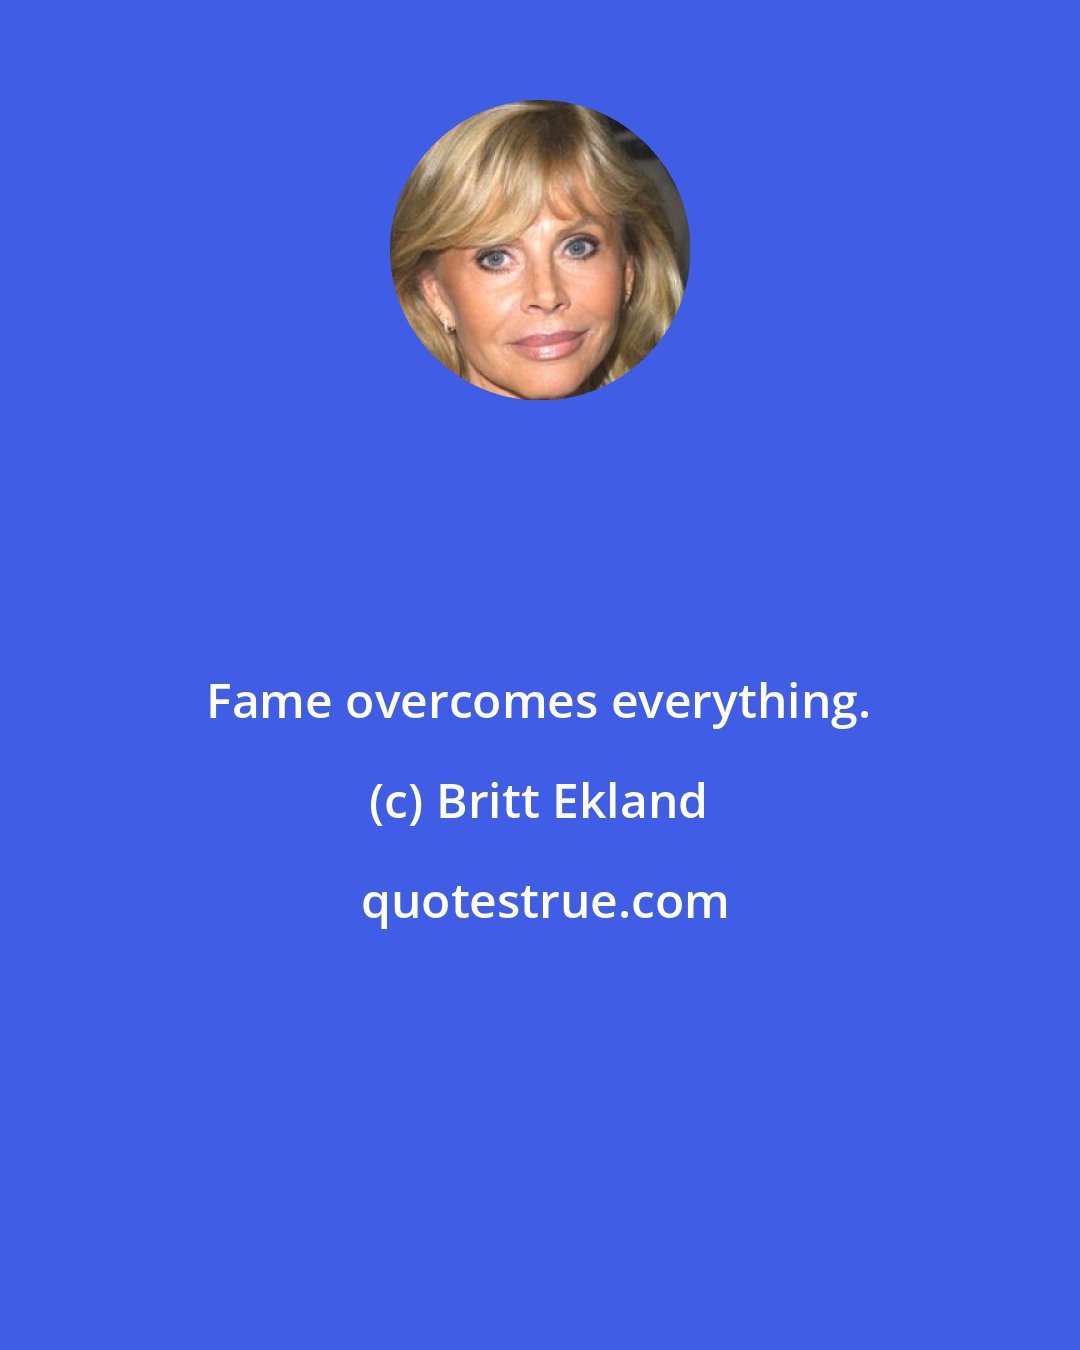 Britt Ekland: Fame overcomes everything.